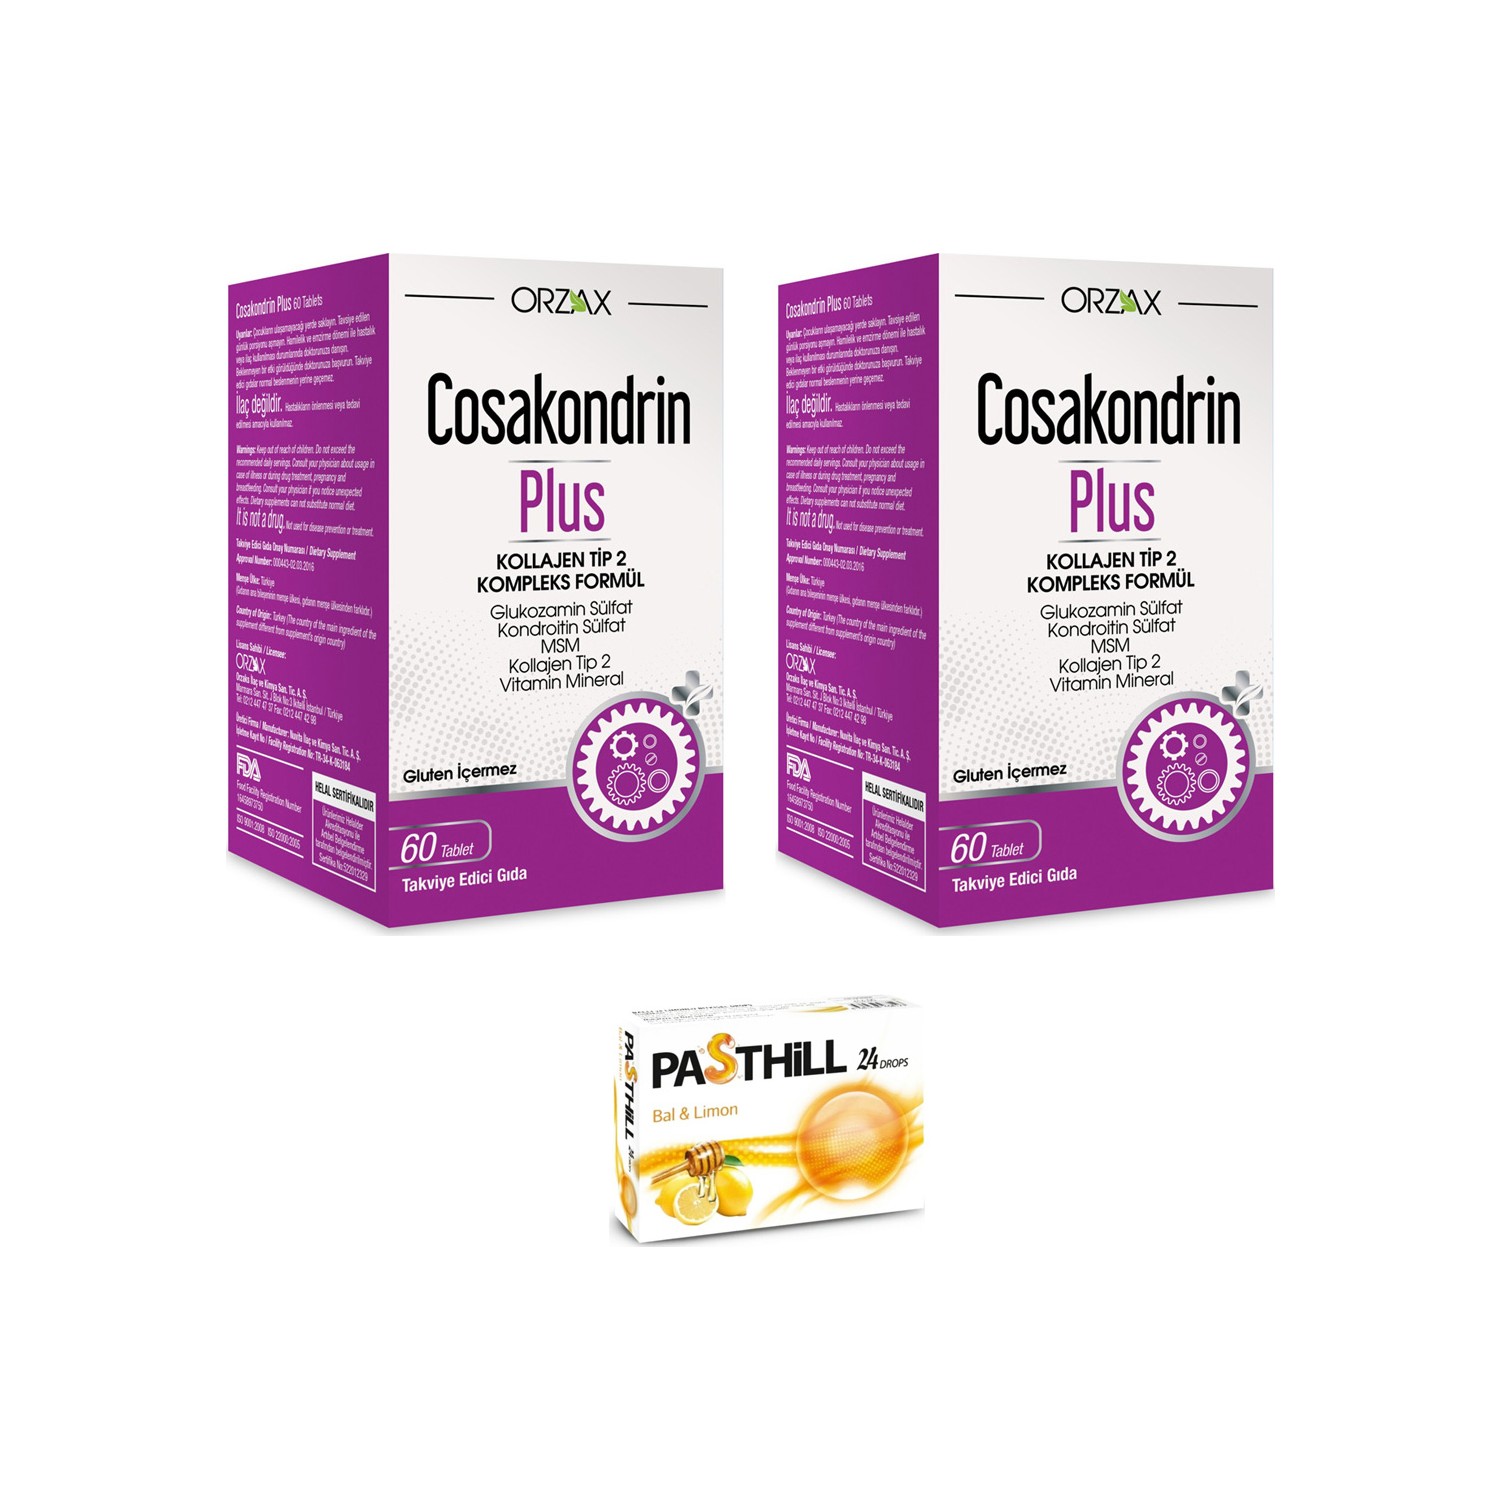 Пищевая добавка Orzax Cosakondrin Plus, 2 упаковки по 60 таблеток + Пастилки Pasthill со вкусом меда и лимона, 2 упаковки цена и фото